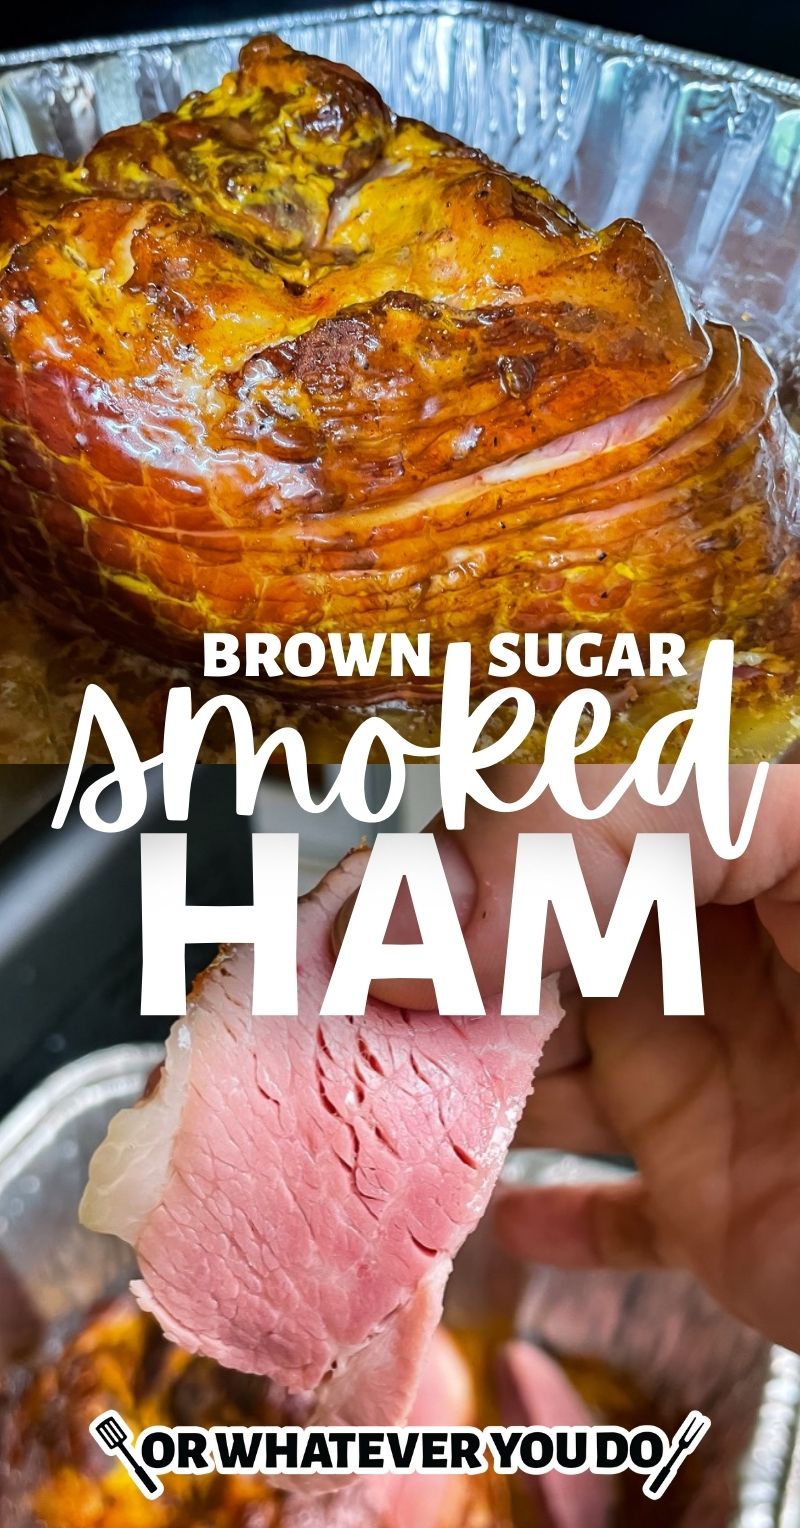 Brown Sugar Smoked Ham